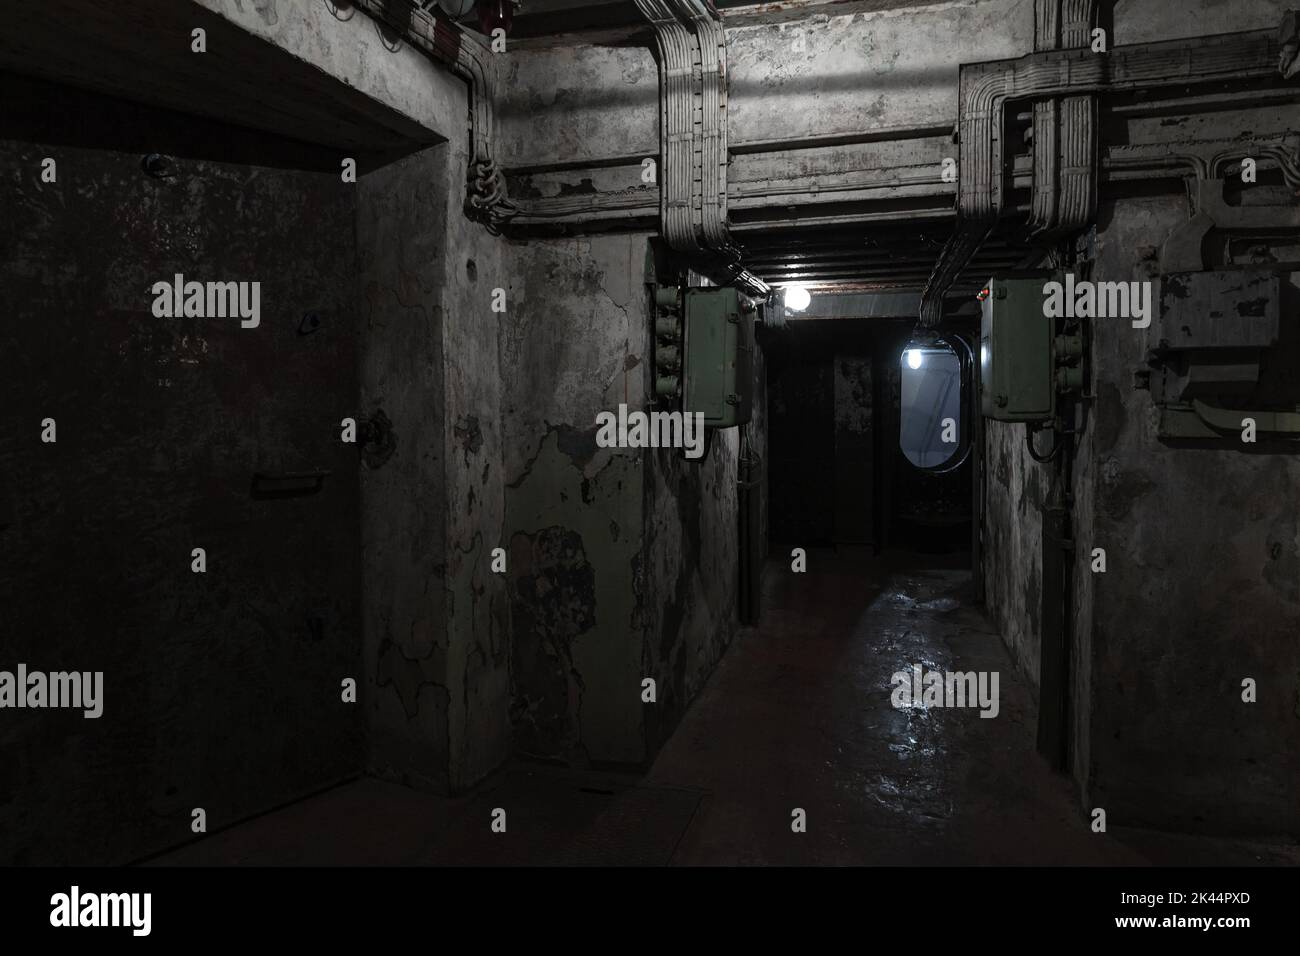 Interior abstracto de búnker militar oscuro, habitaciones subterráneas grungy con mala iluminación Foto de stock